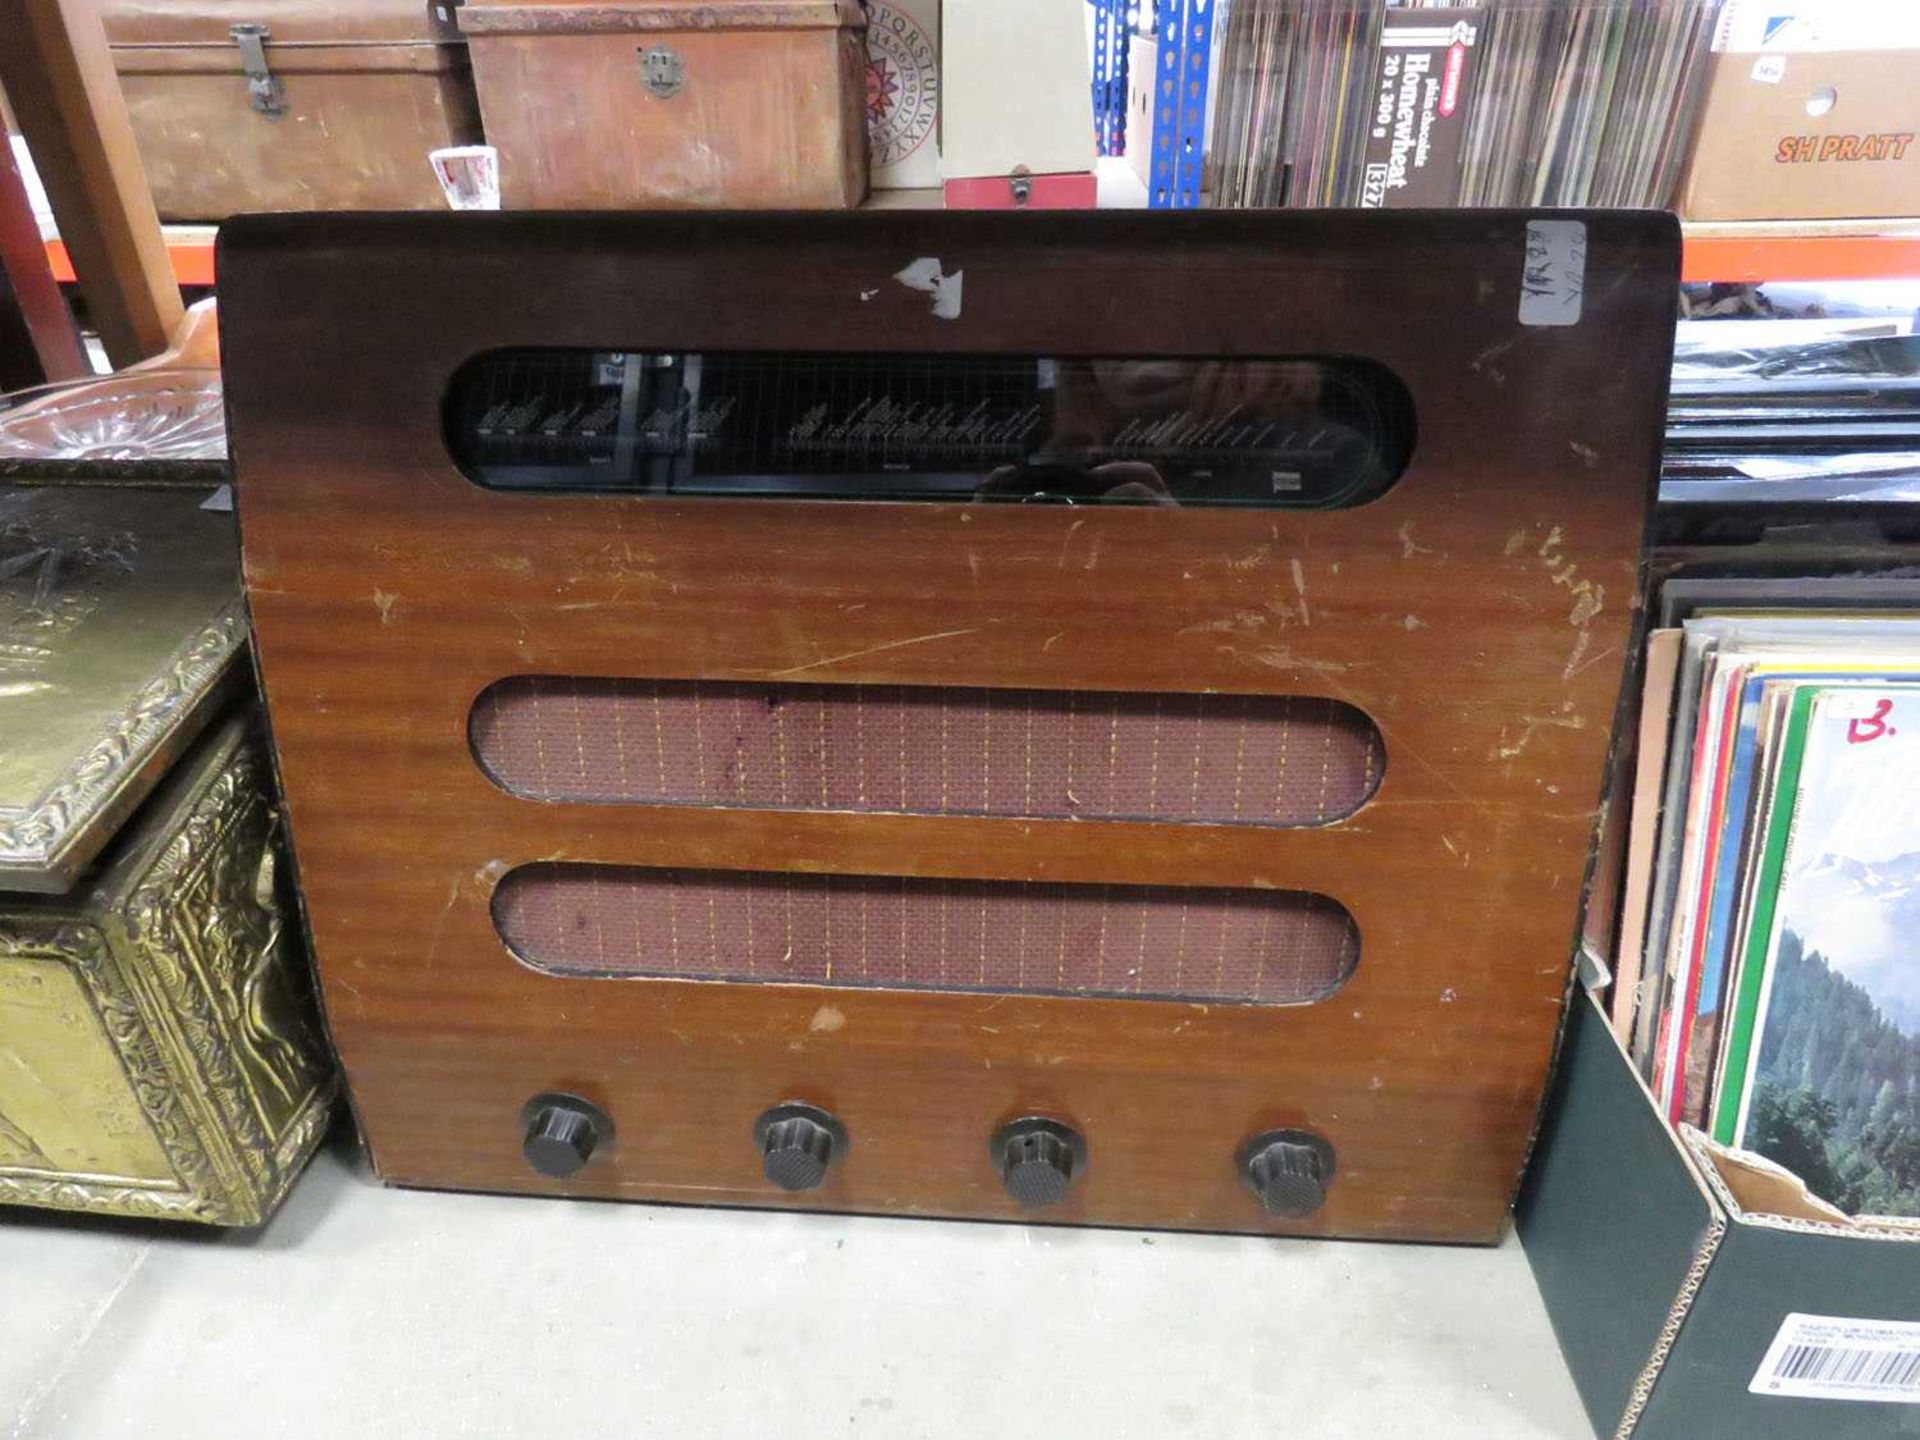 Copper clad coal bucket and a vintage radio - Image 3 of 3